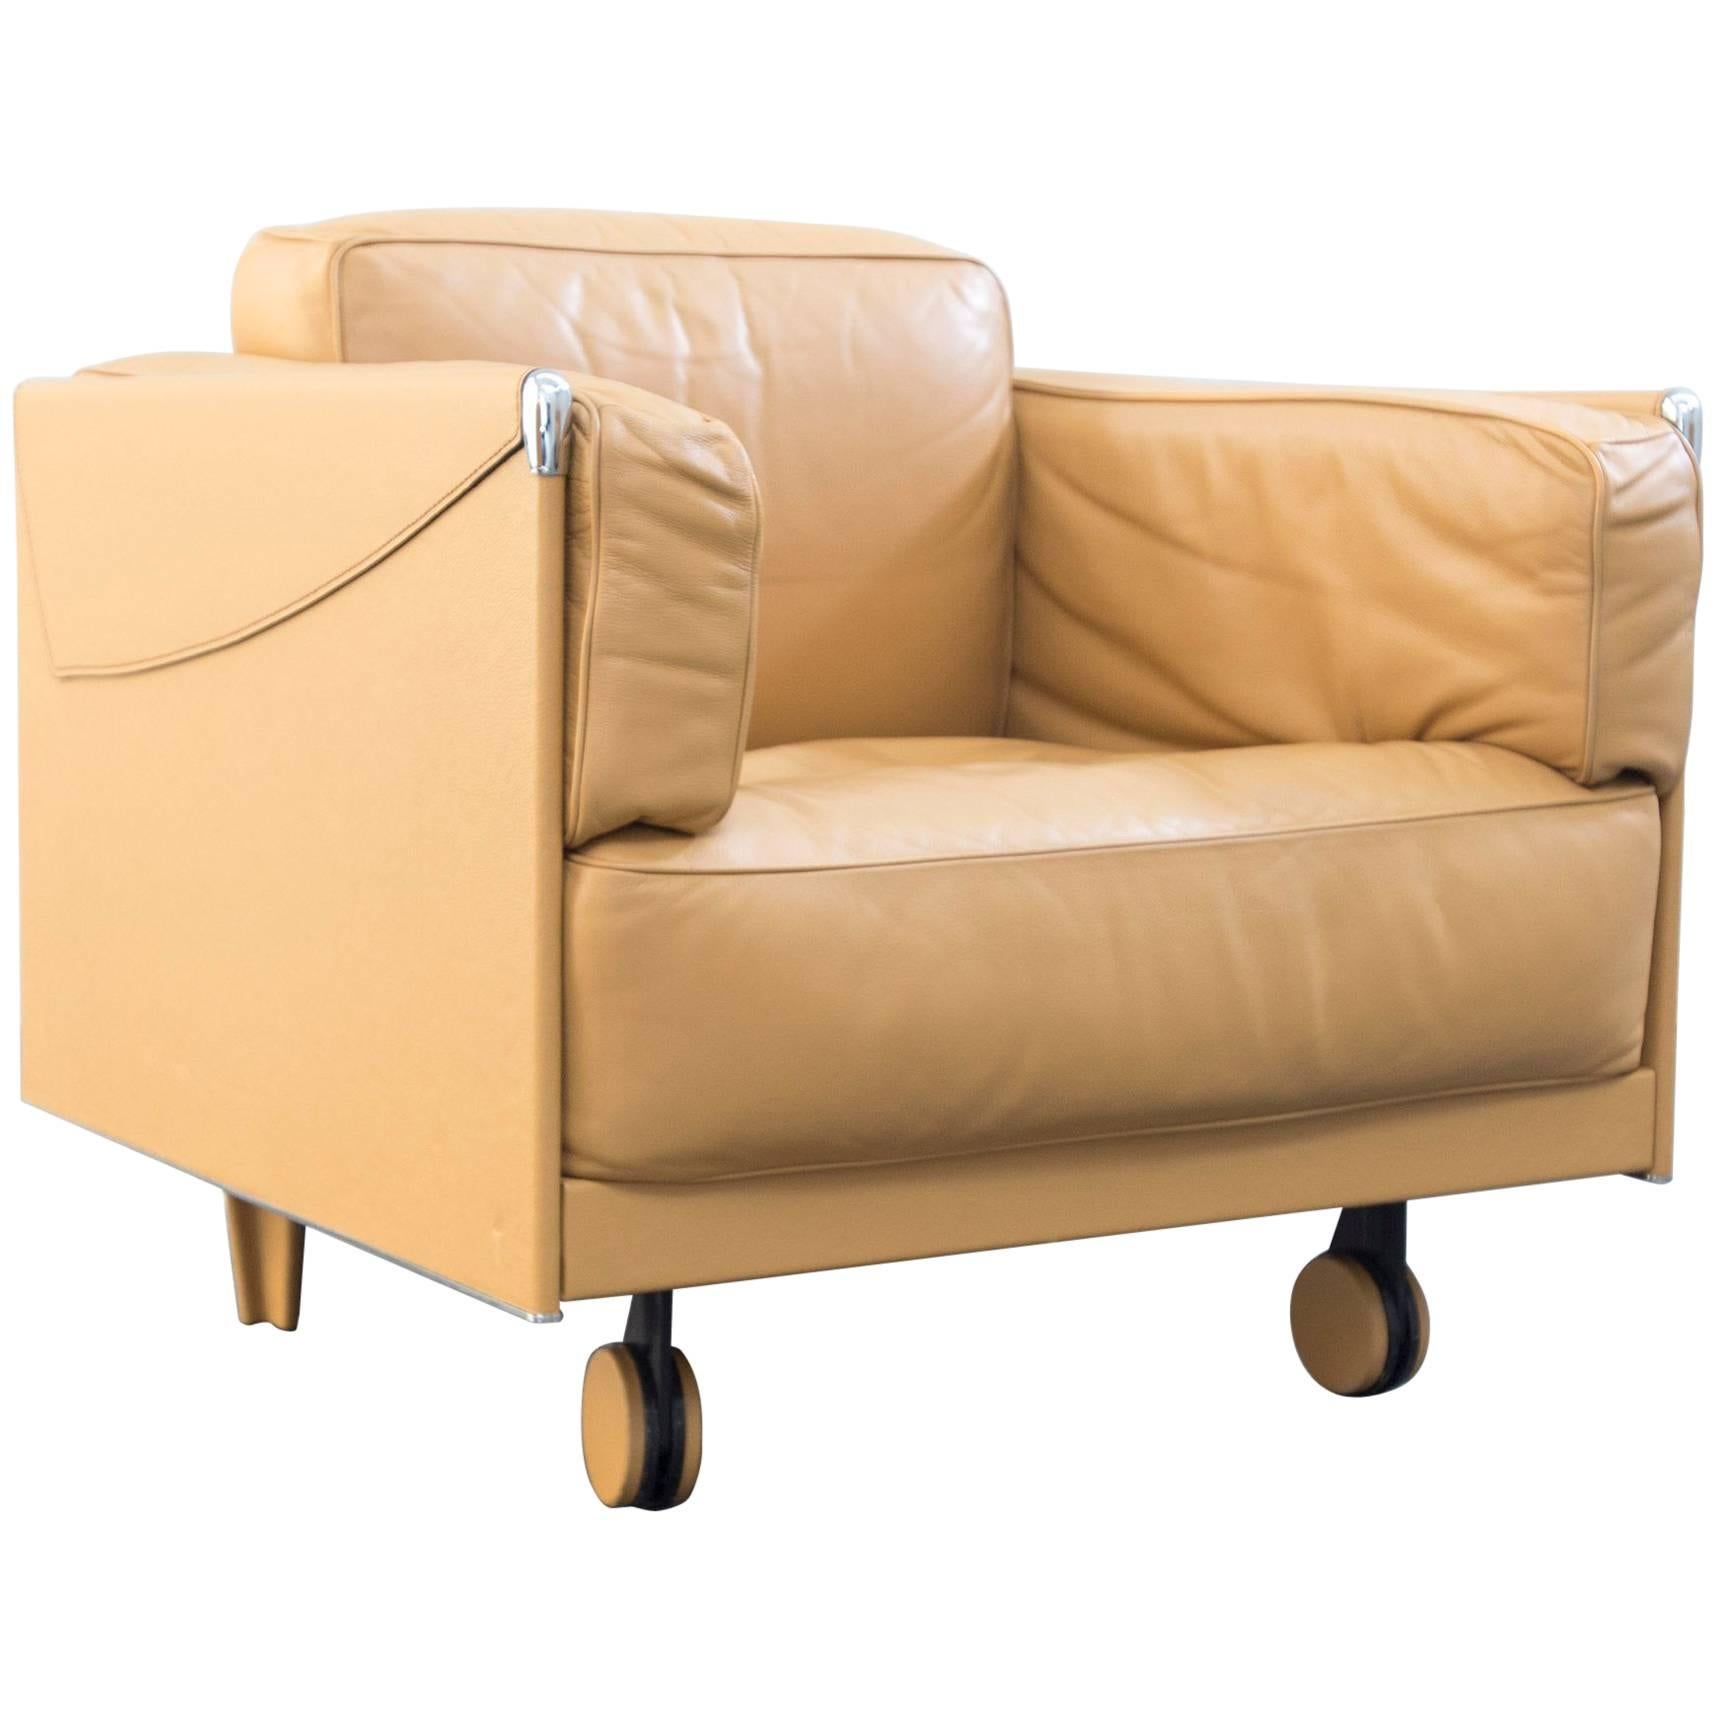 Poltrona Frau Twice 1999 Designer Chair Leather Mustard Yellow One Seat Modern For Sale